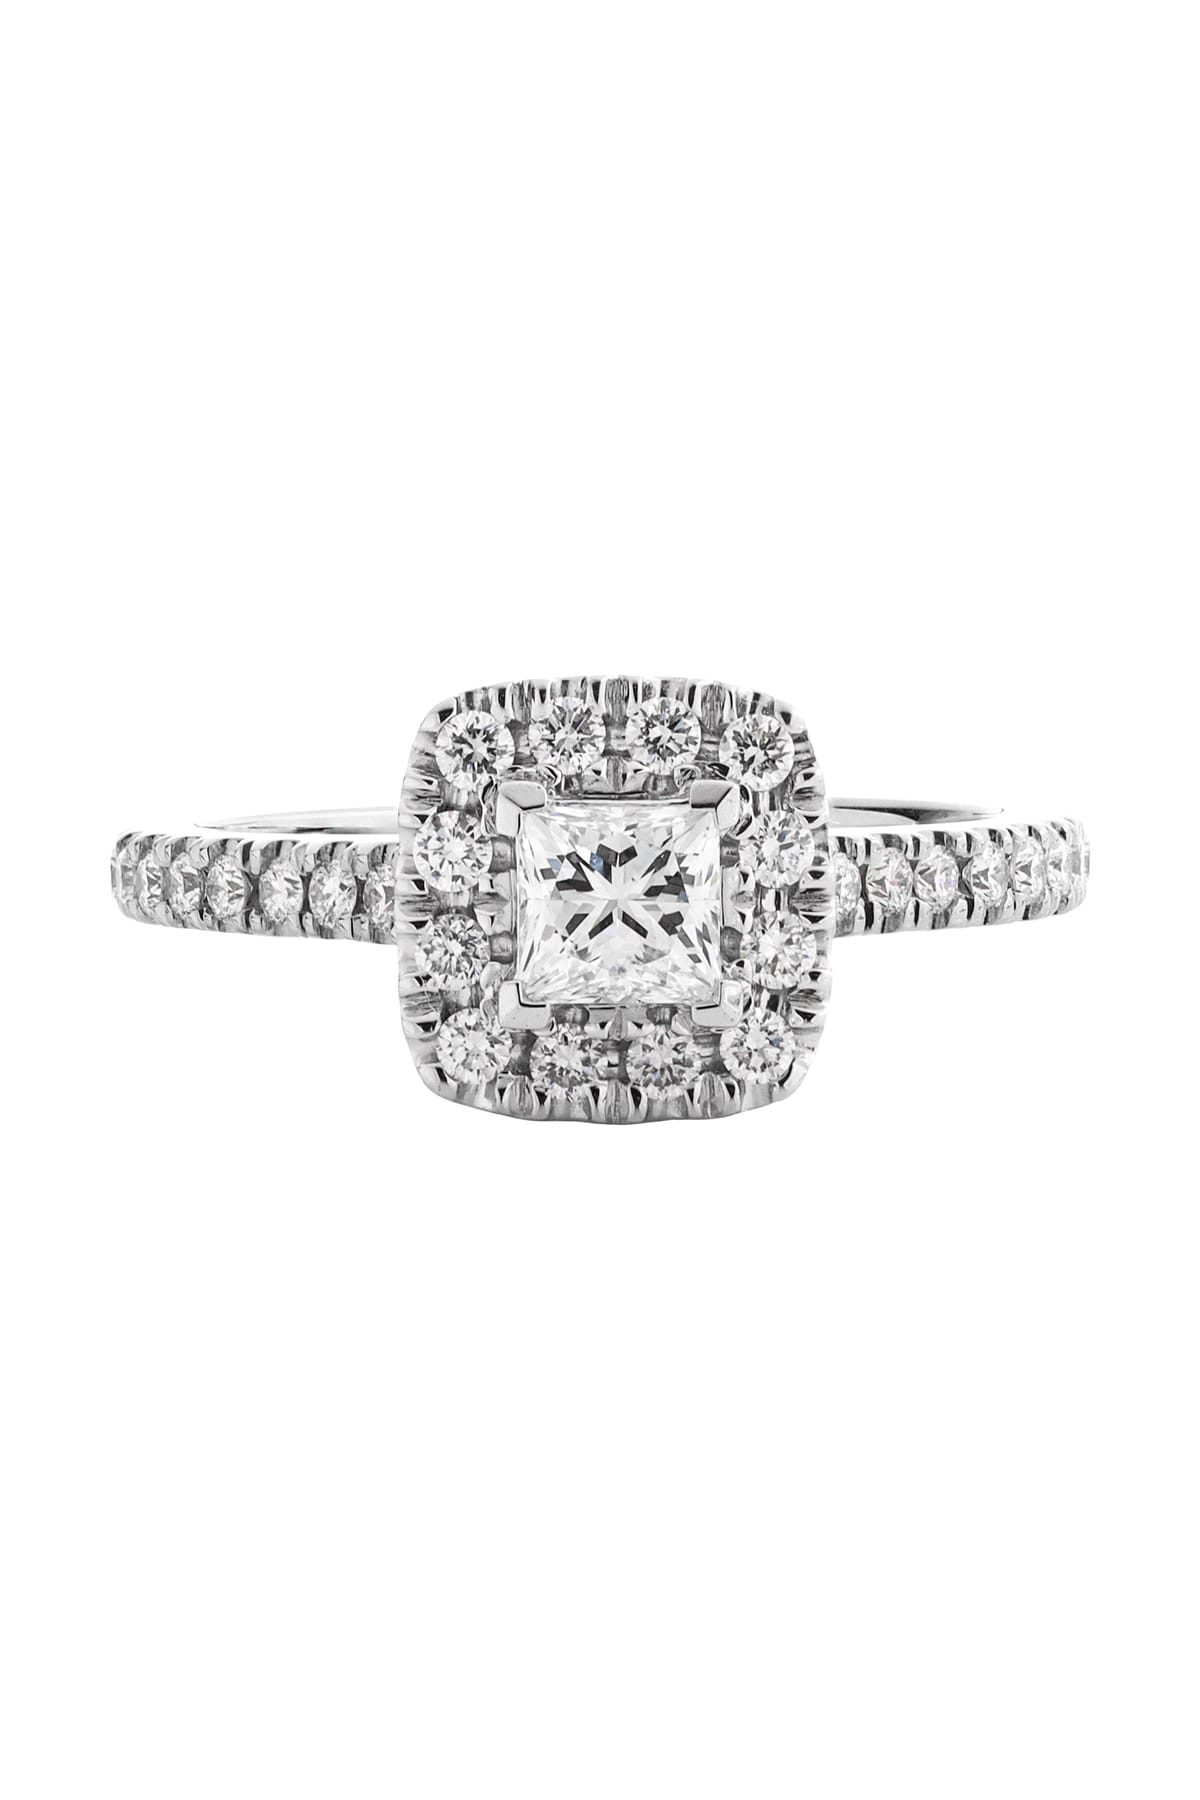 18 carat Gold Princess Diamond Halo Engagement Ring available at LeGassick Diamonds and Jewellery Gold Coast, Australia